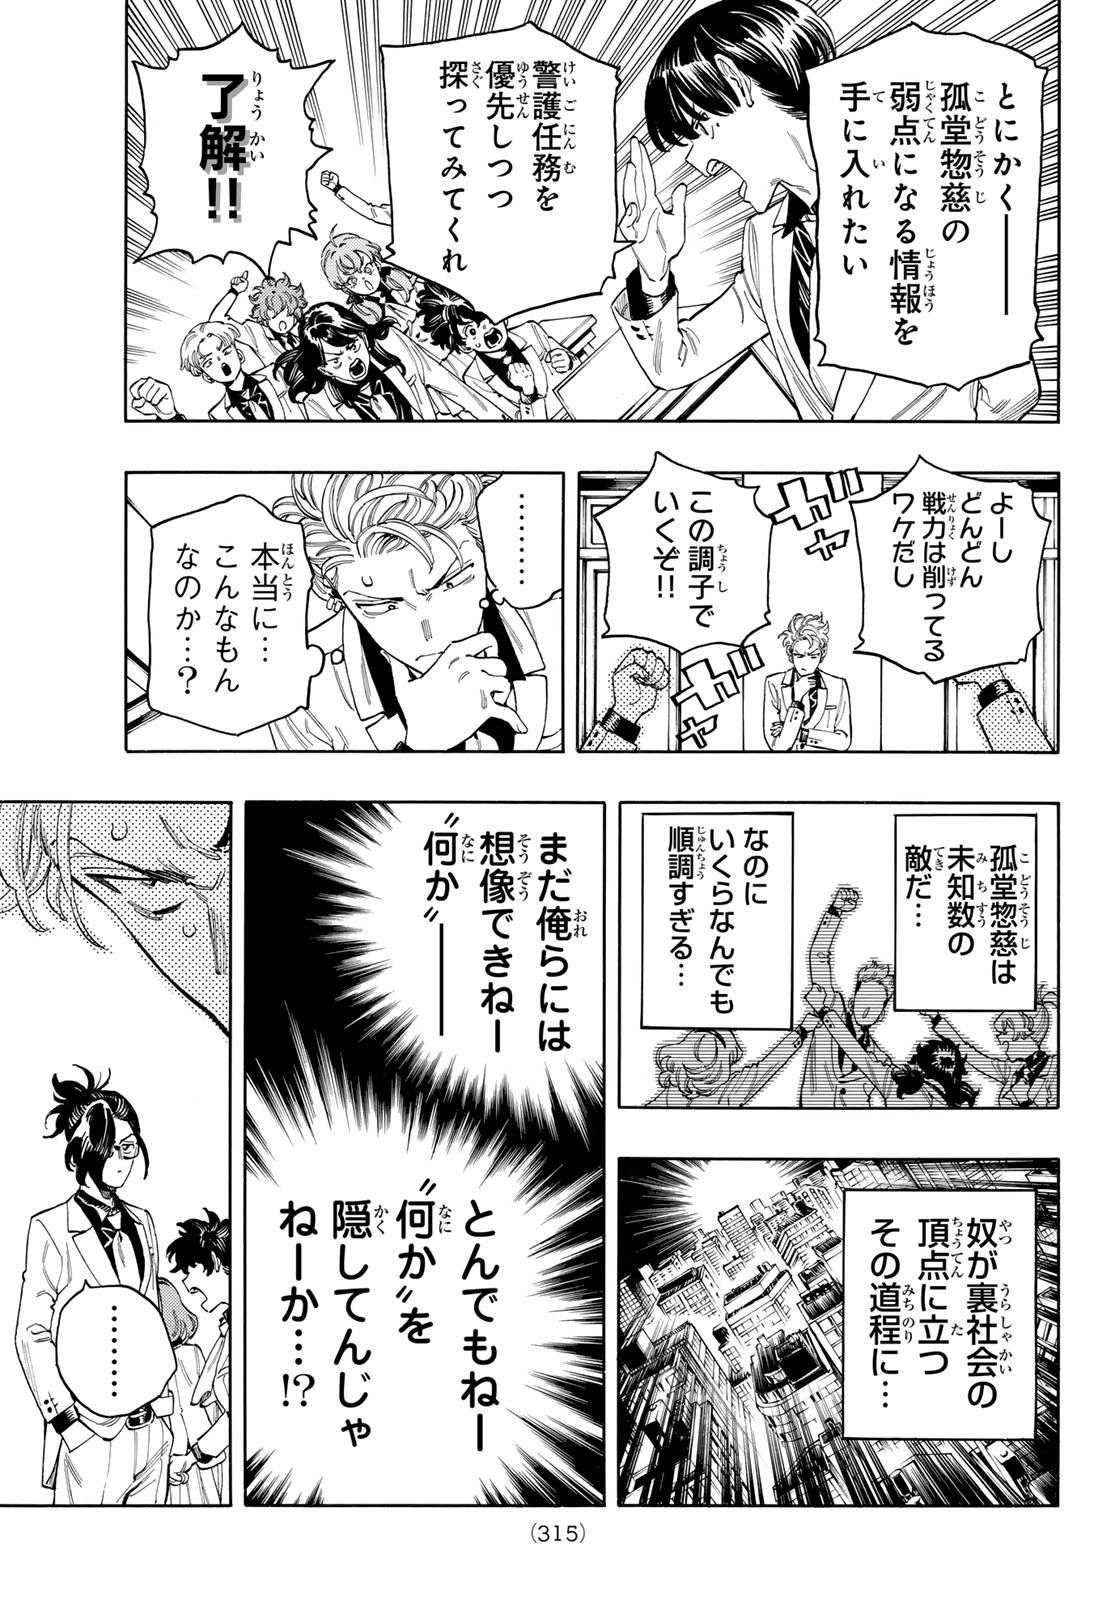 Akabane Honeko no Bodyguard - Chapter 84 - Page 9